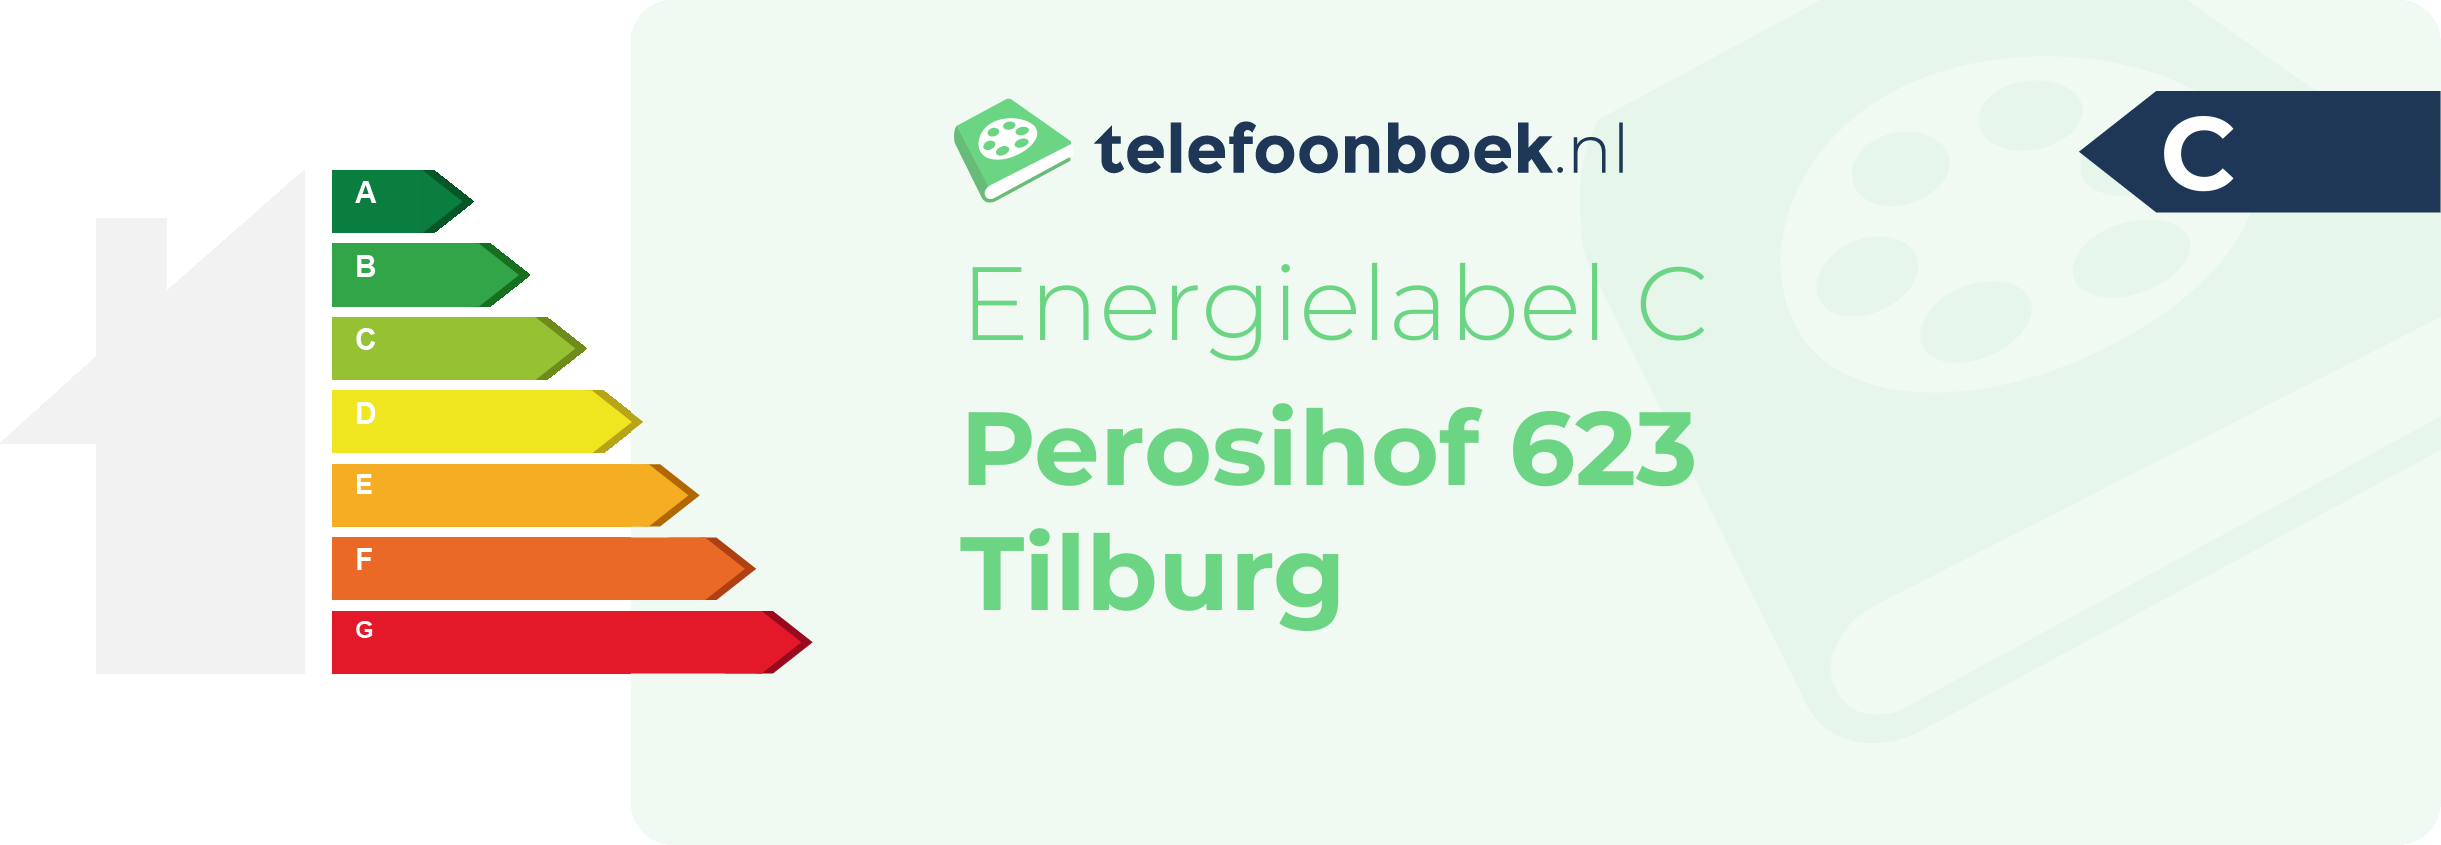 Energielabel Perosihof 623 Tilburg